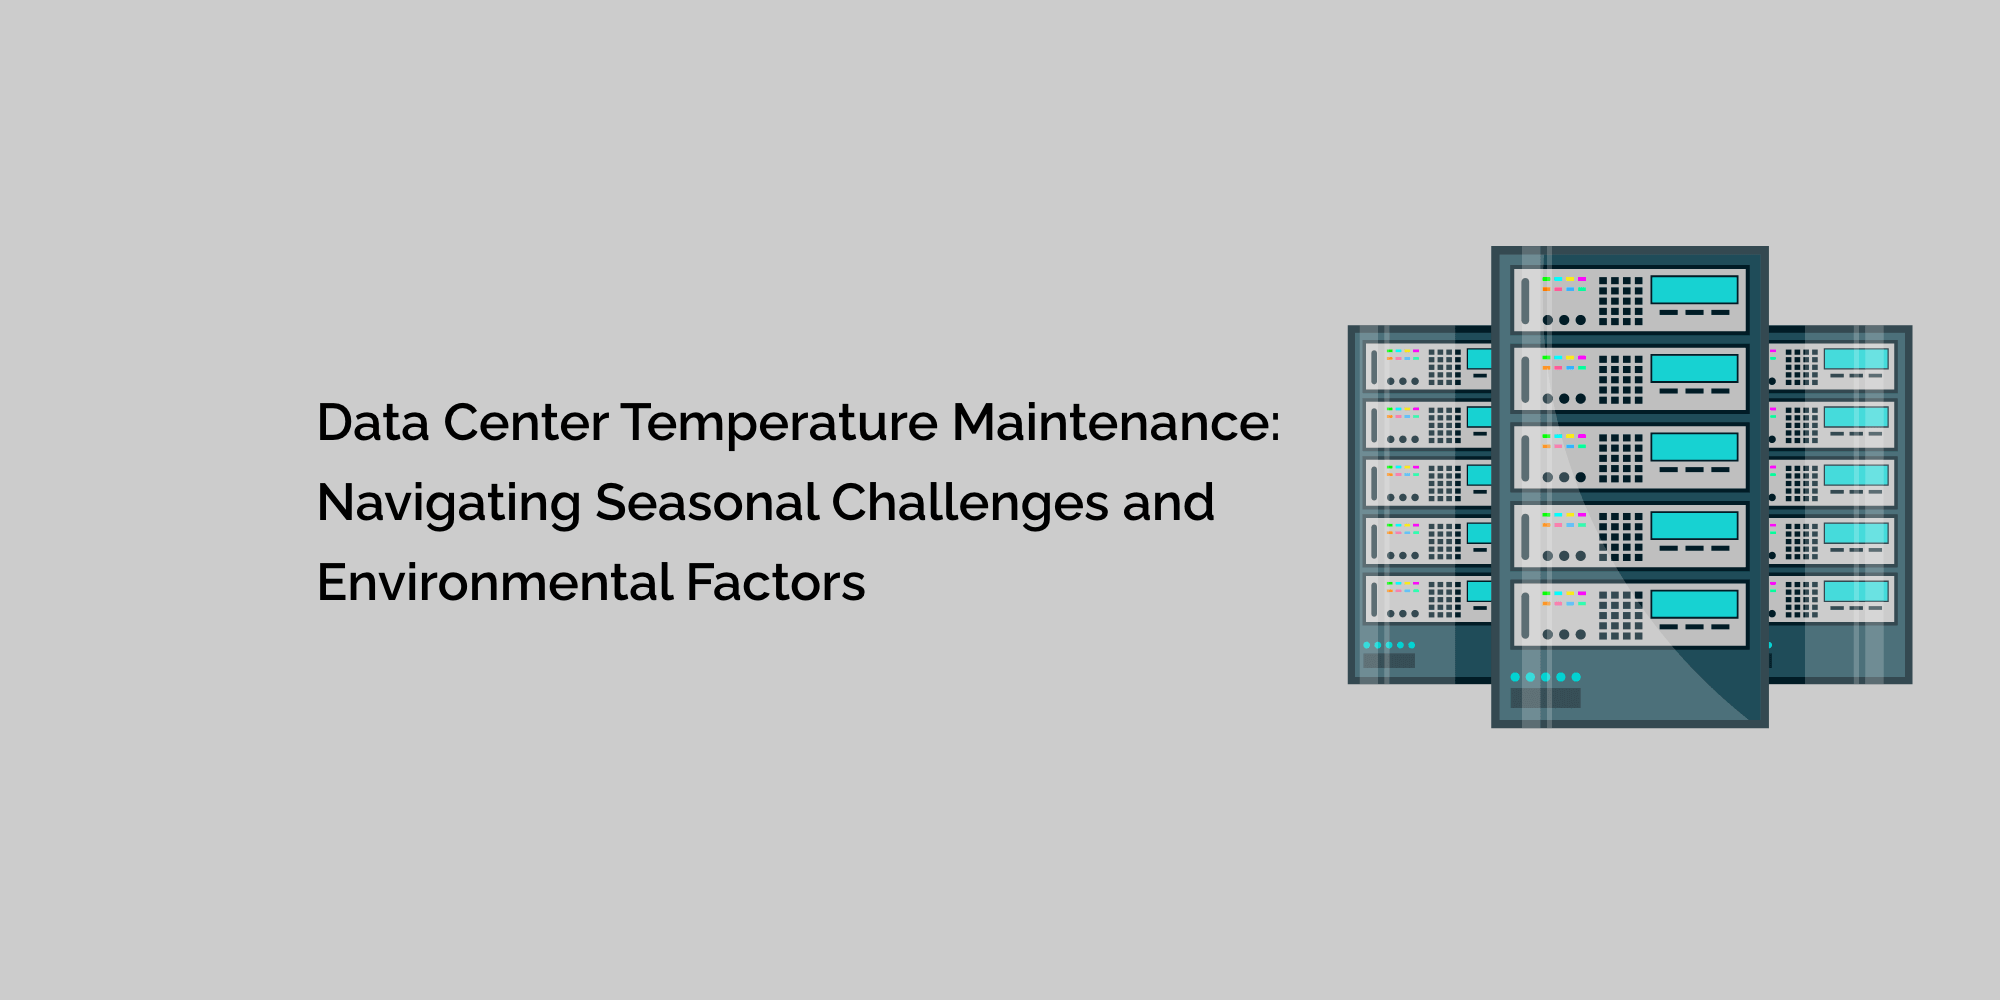 Data Center Temperature Maintenance: Navigating Seasonal Challenges and Environmental Factors